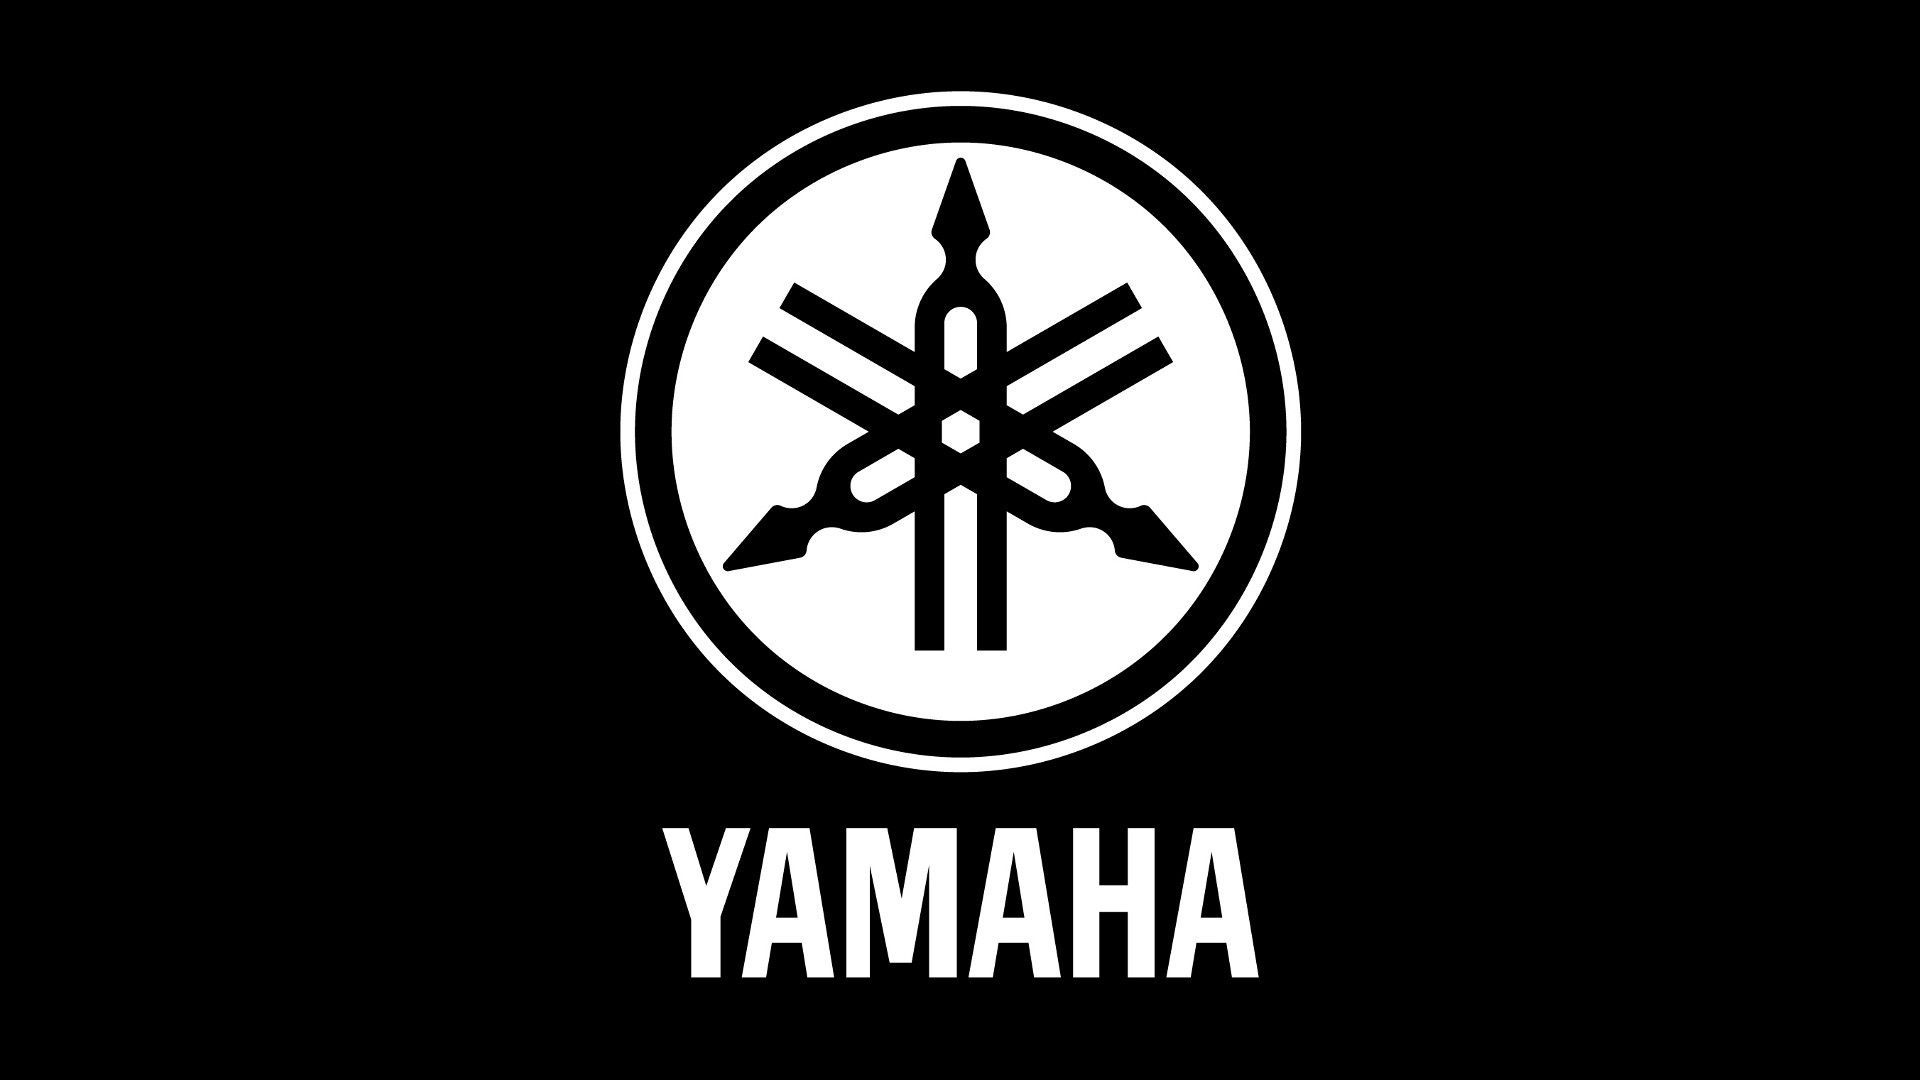 Yamaha logo wallpapers